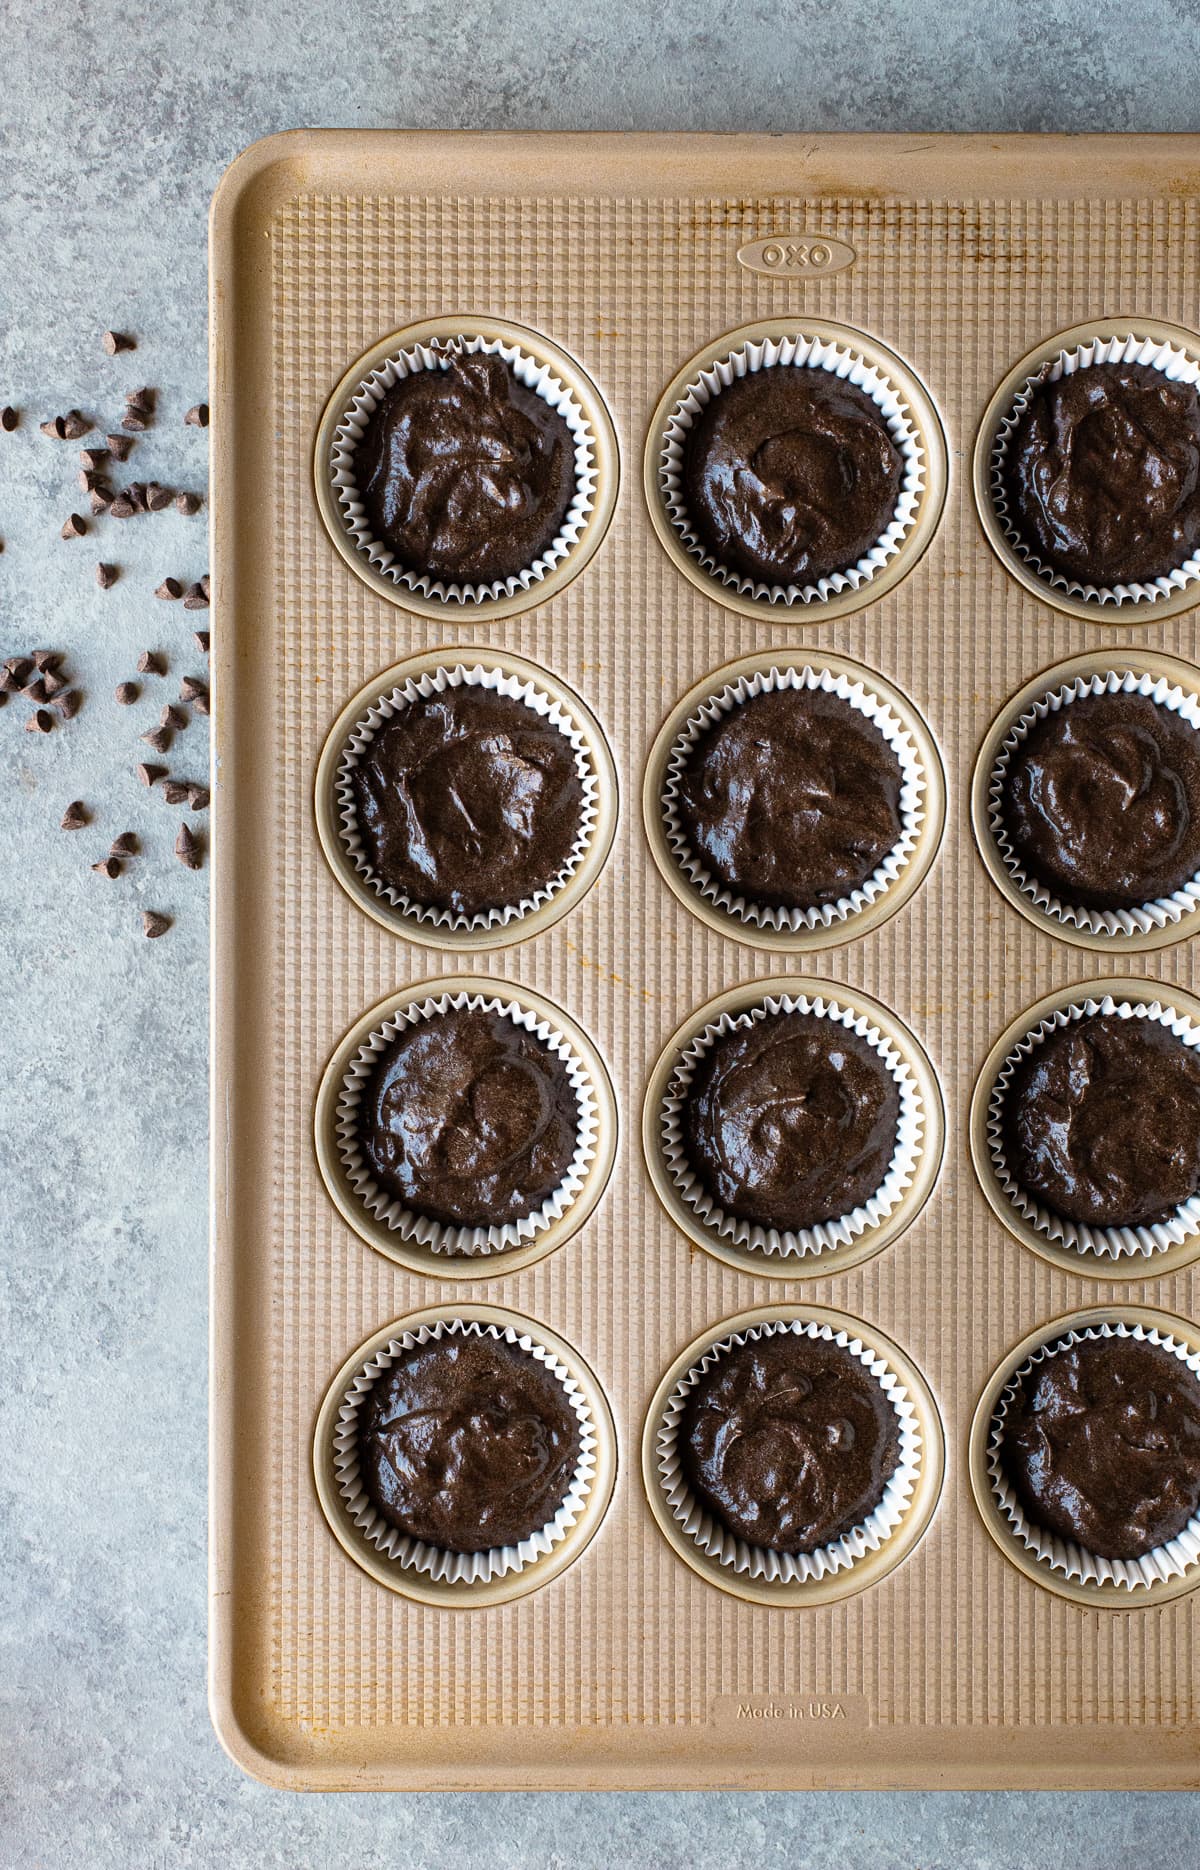 Chocolate cupcake batter in a muffin pan.